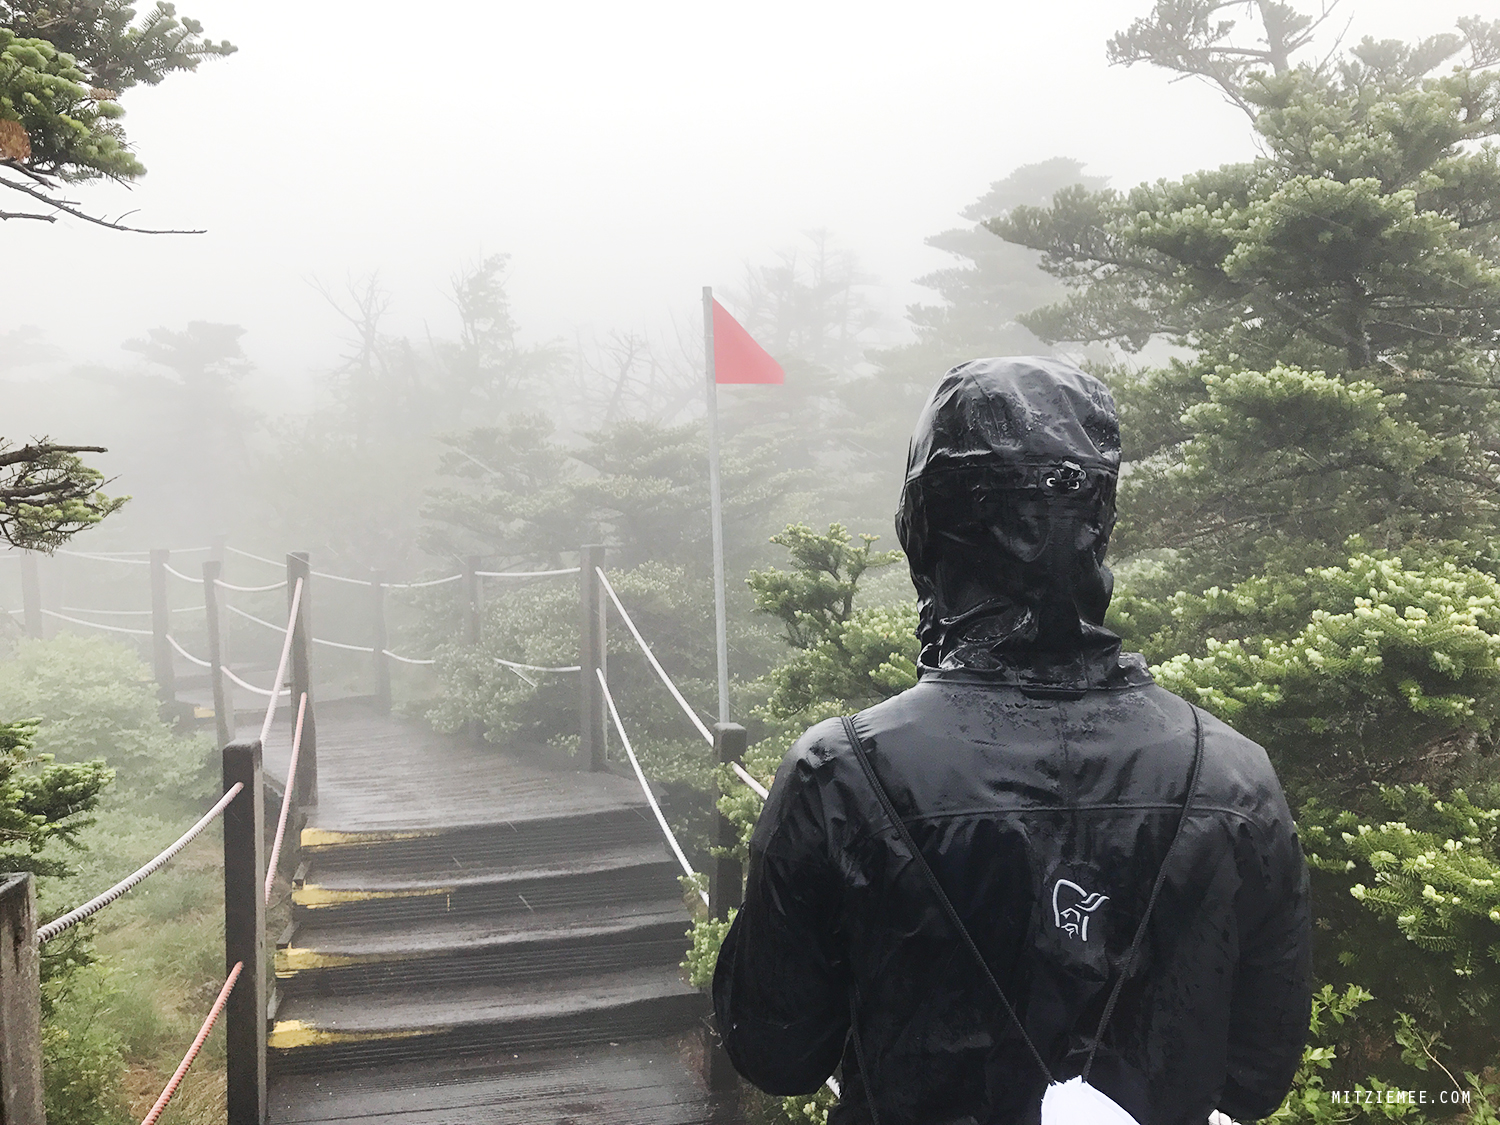 Hallasan mountain hiking, Jeju, South Korea